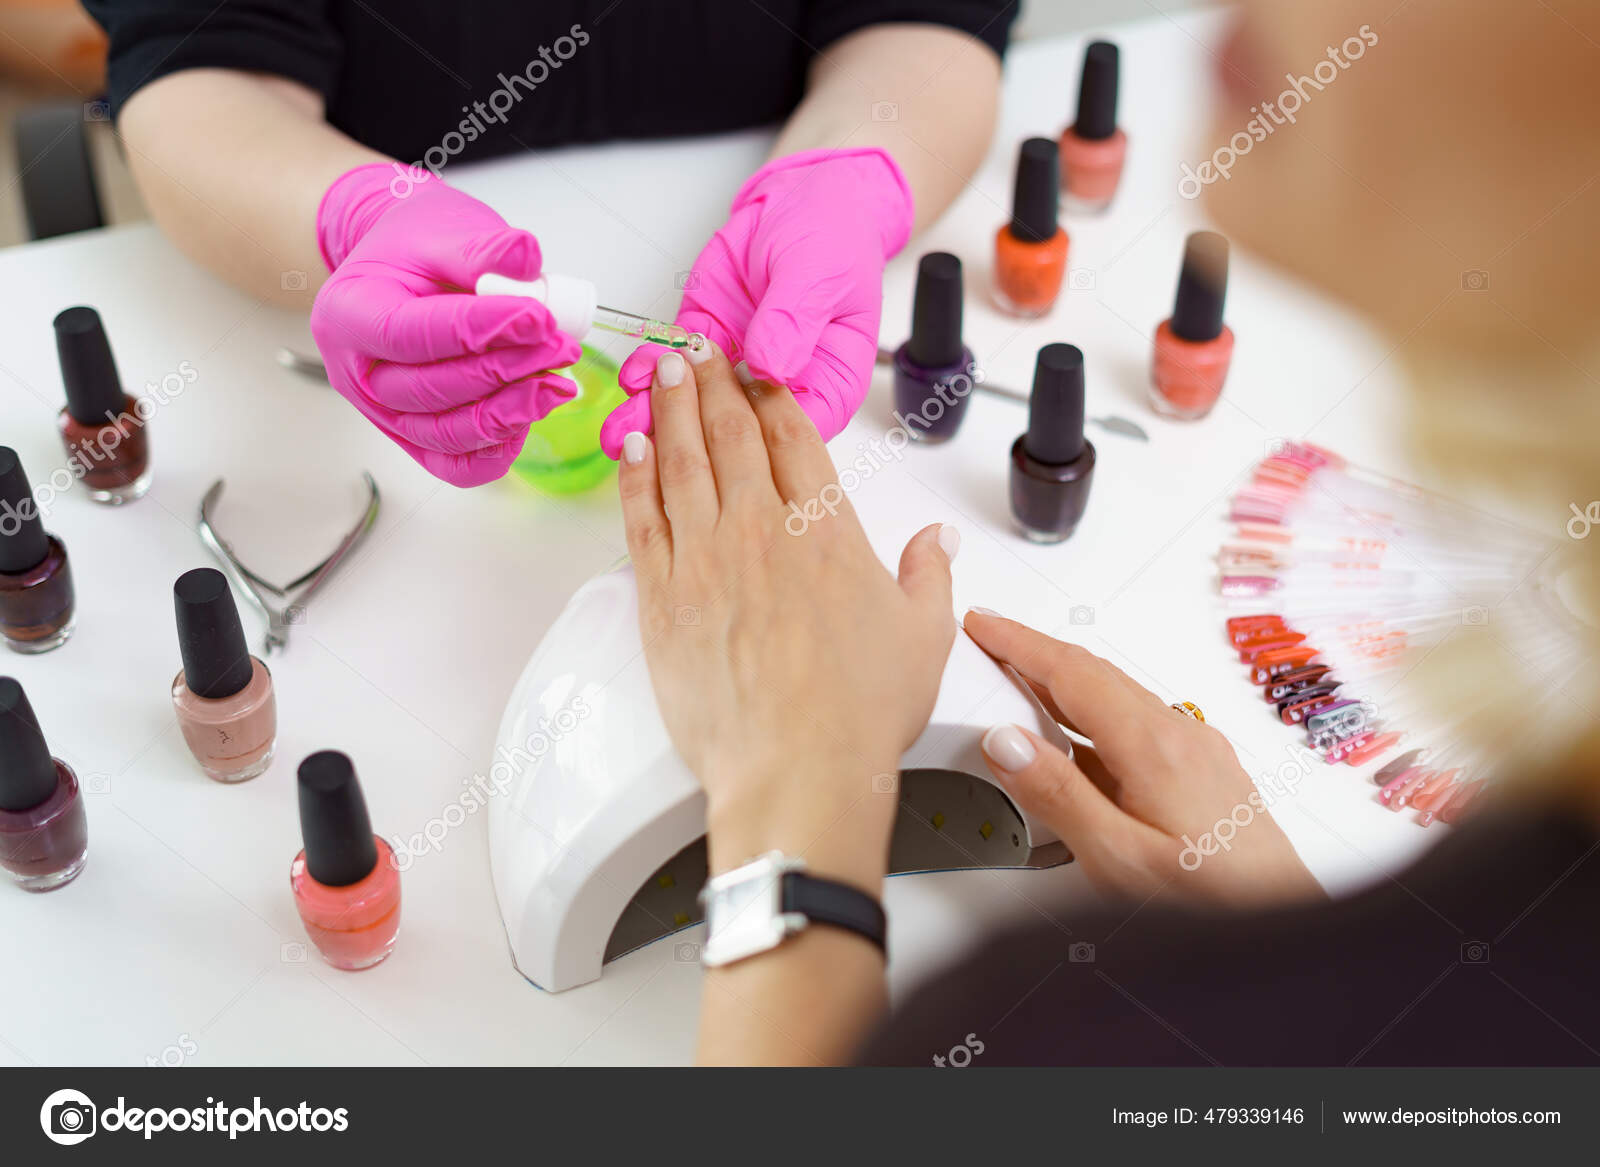 Mestre e cliente de manicure de salão de beleza manicure